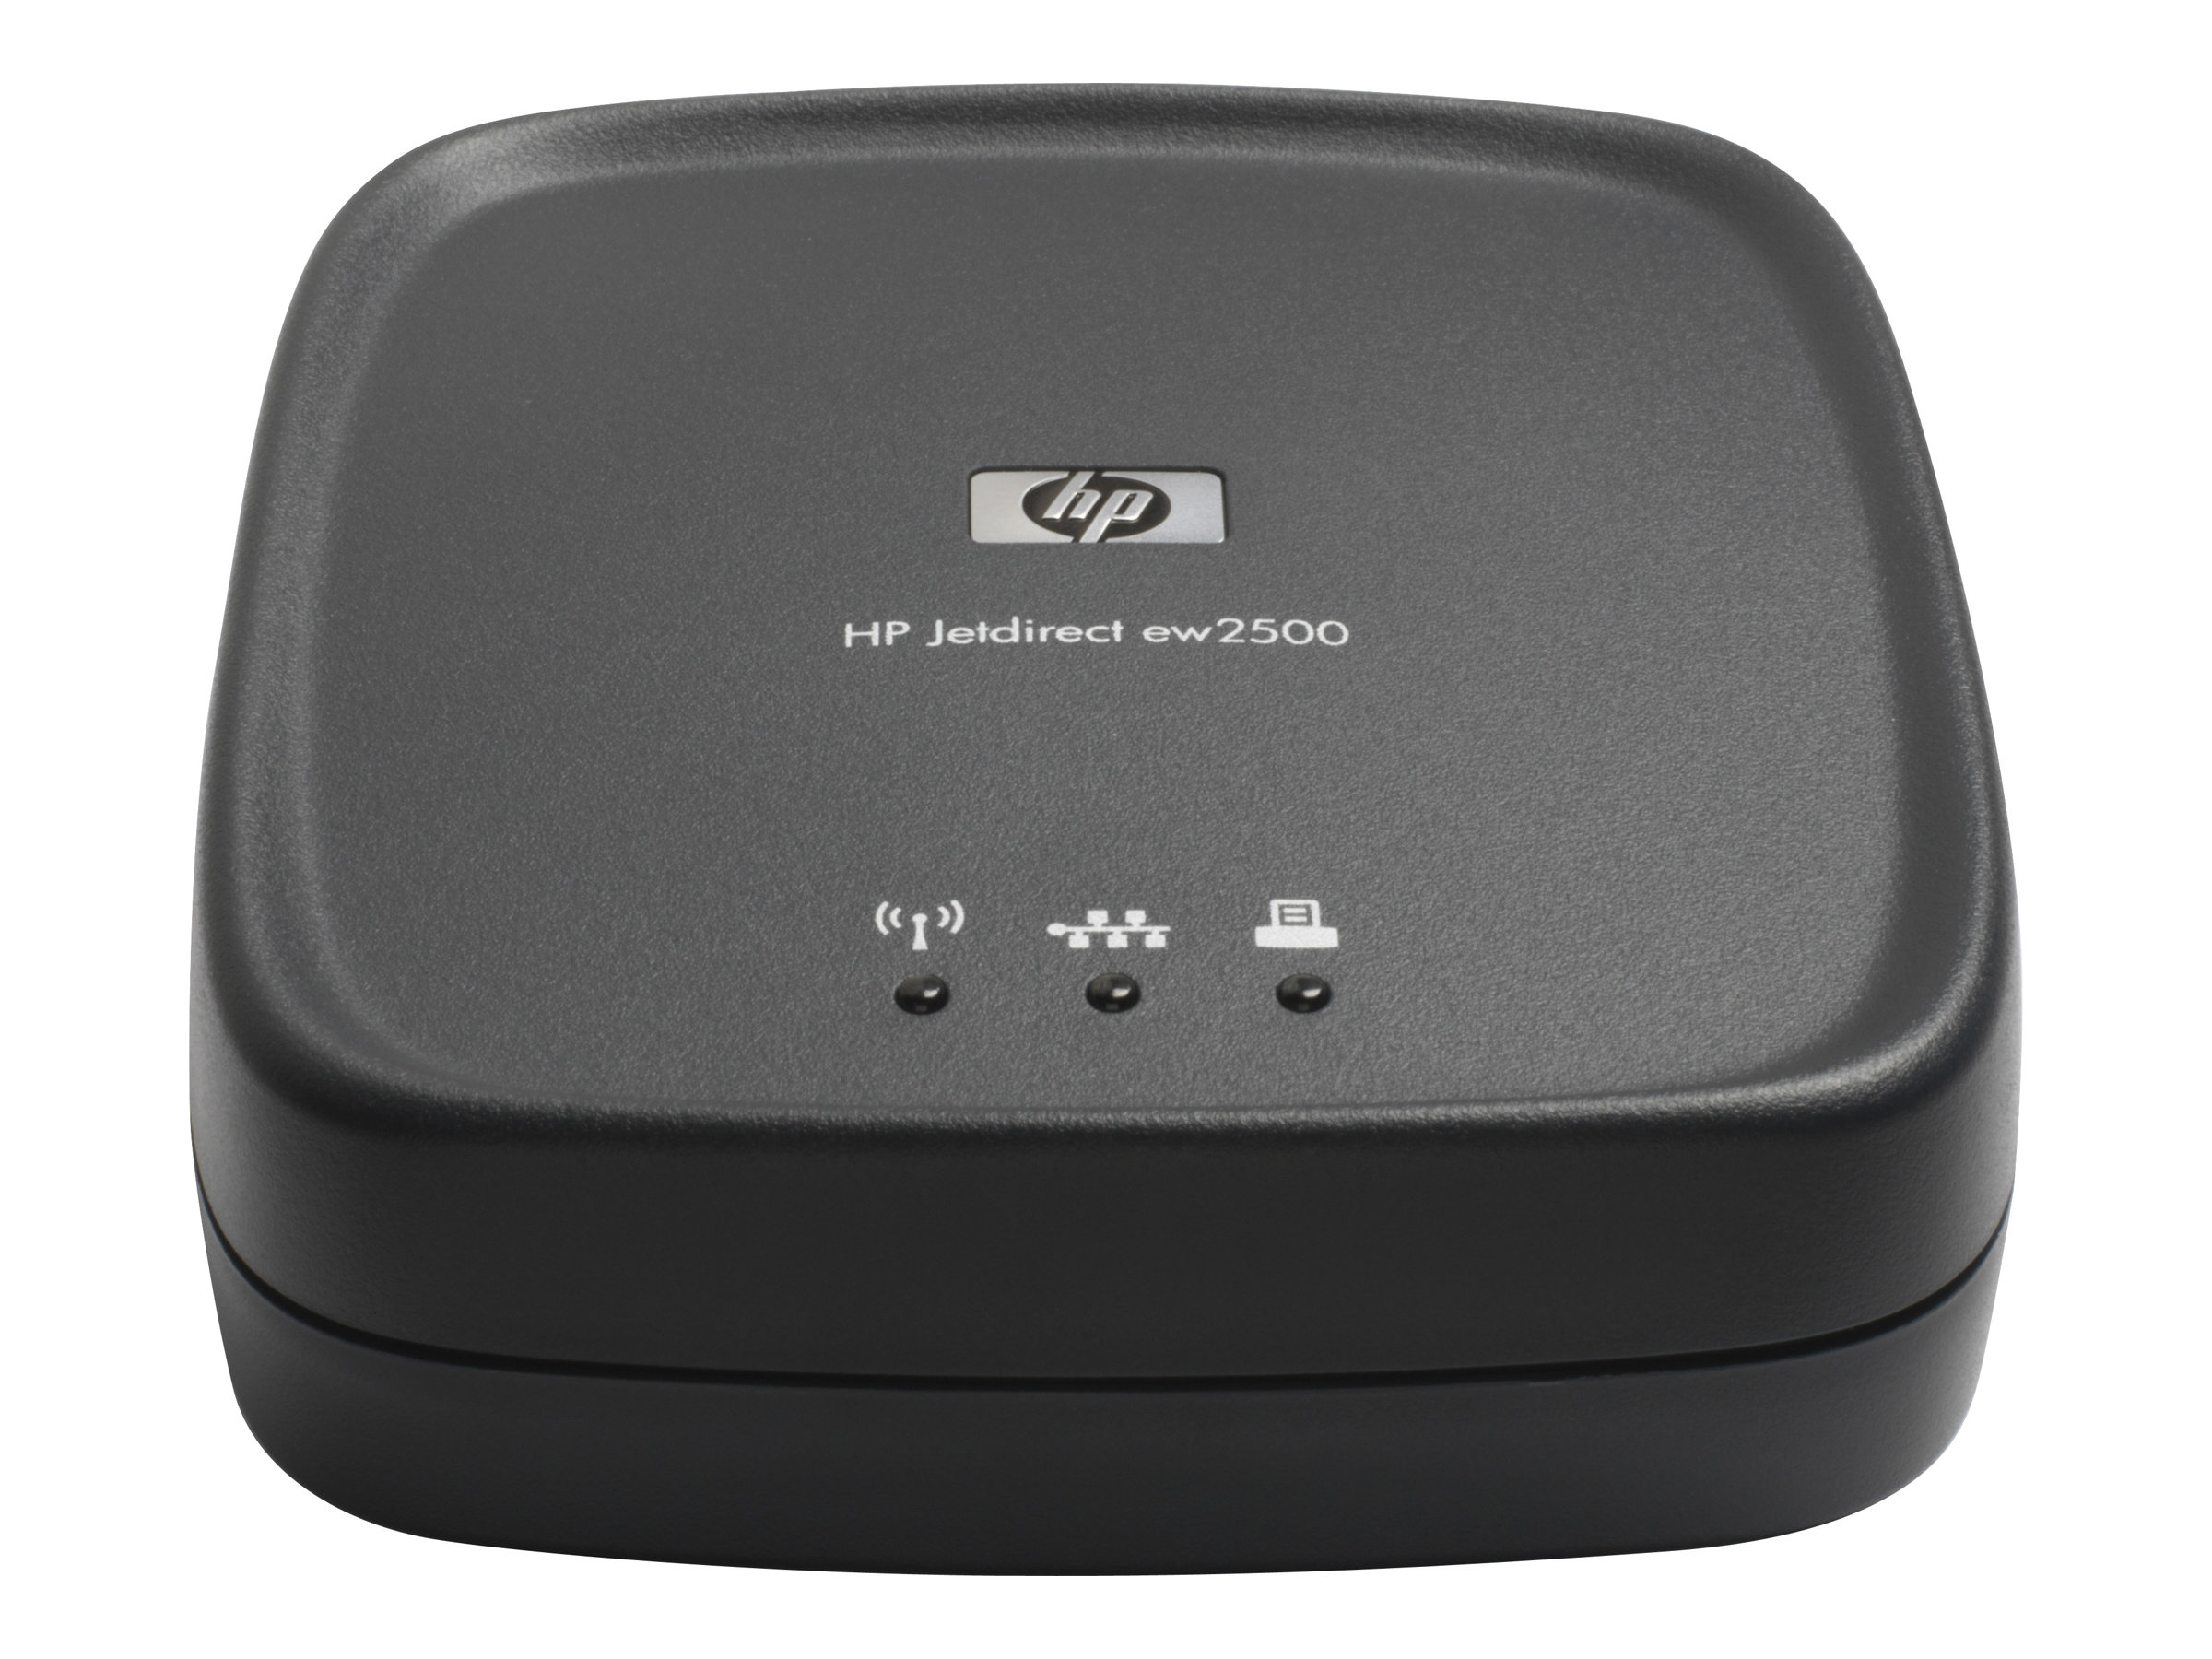 HP JetDirect ew2500 - Druckserver - USB 2.0 - 10/100 Ethernet